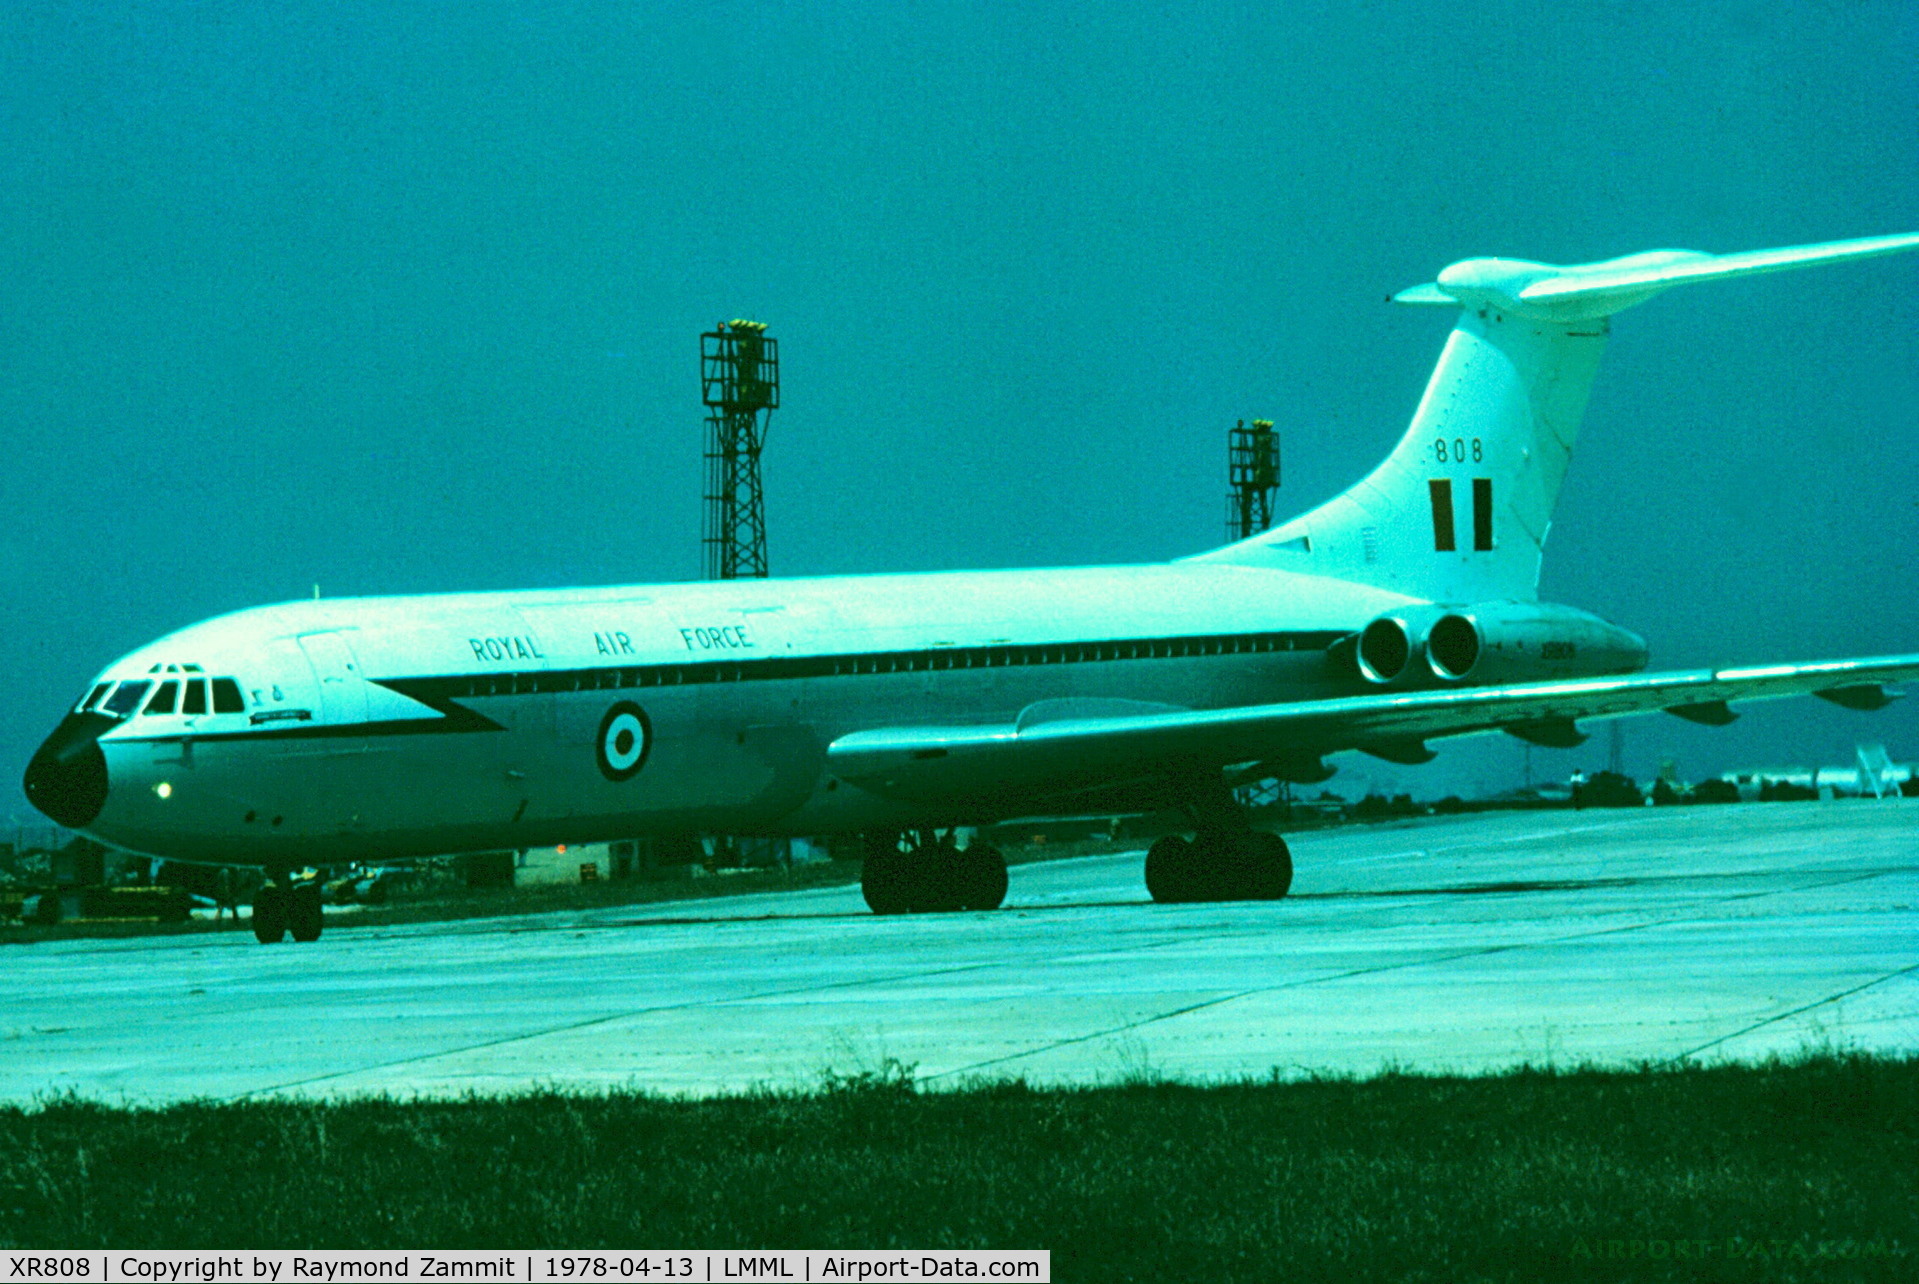 XR808, 1966 Vickers VC10 C.1 C/N 828, Vickers VC10 C.1 XR808 Royal Air Force